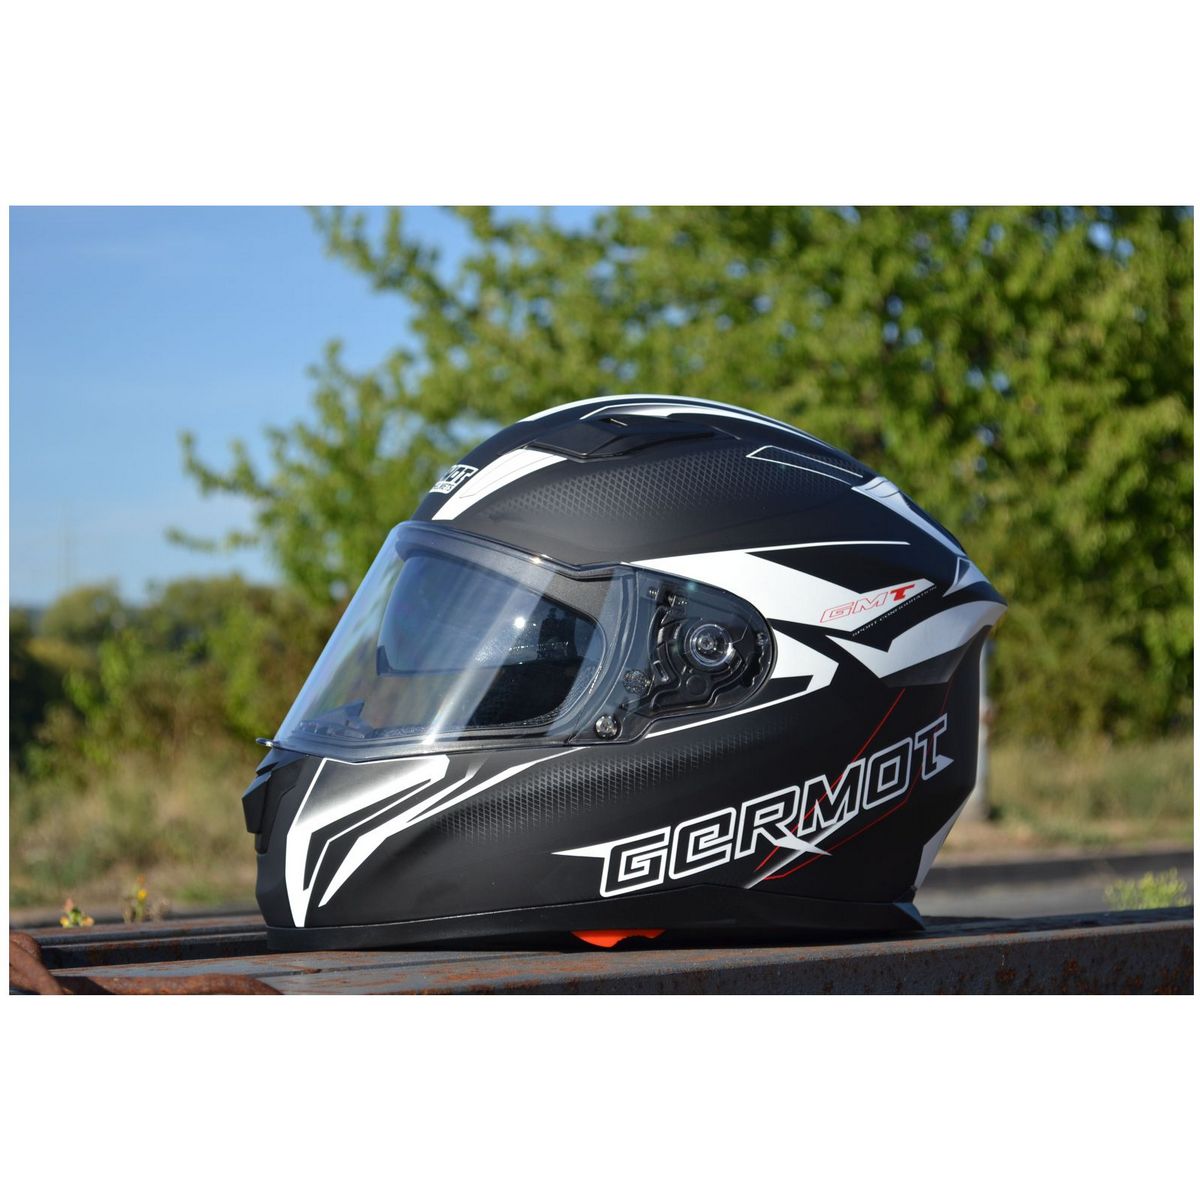 Germot Motorrad Helm GM 330 Integralhelm mit integriertem Sonnenvisier matt Blac